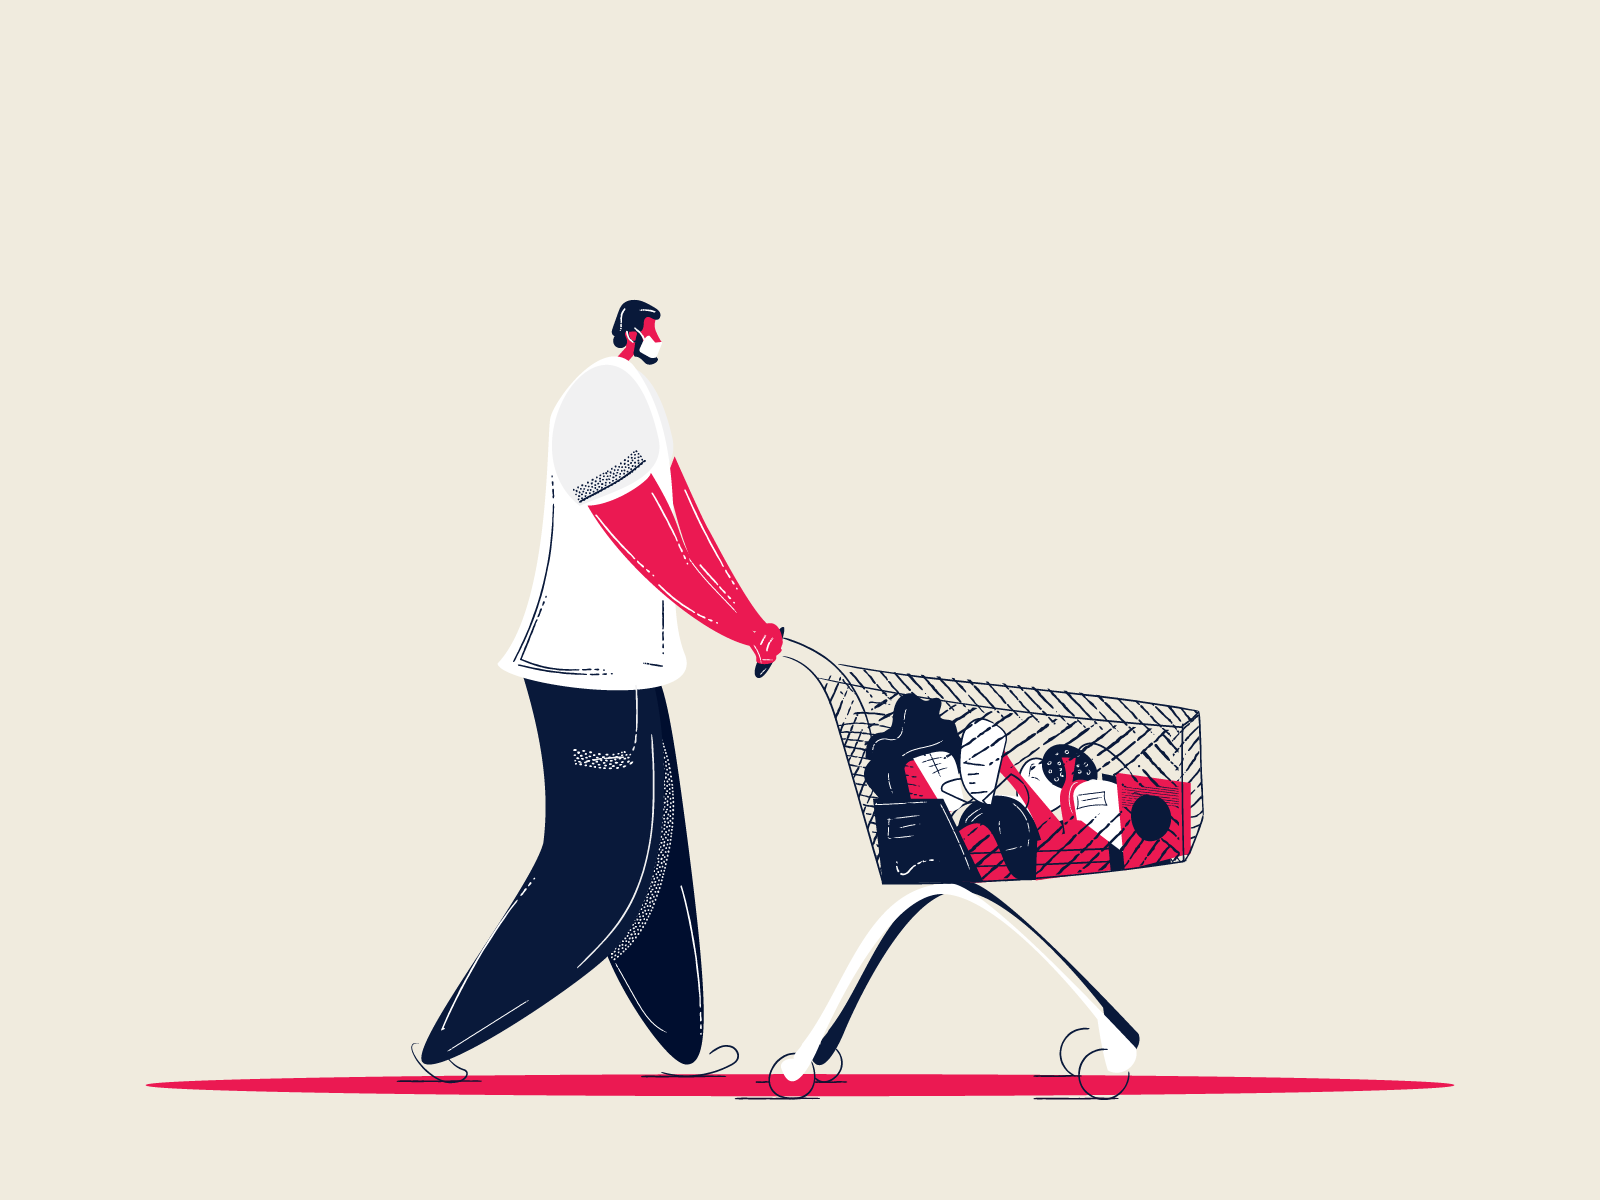 Man at the Supermarket Illustration by Mariza Vasilikopoulou on Dribbble